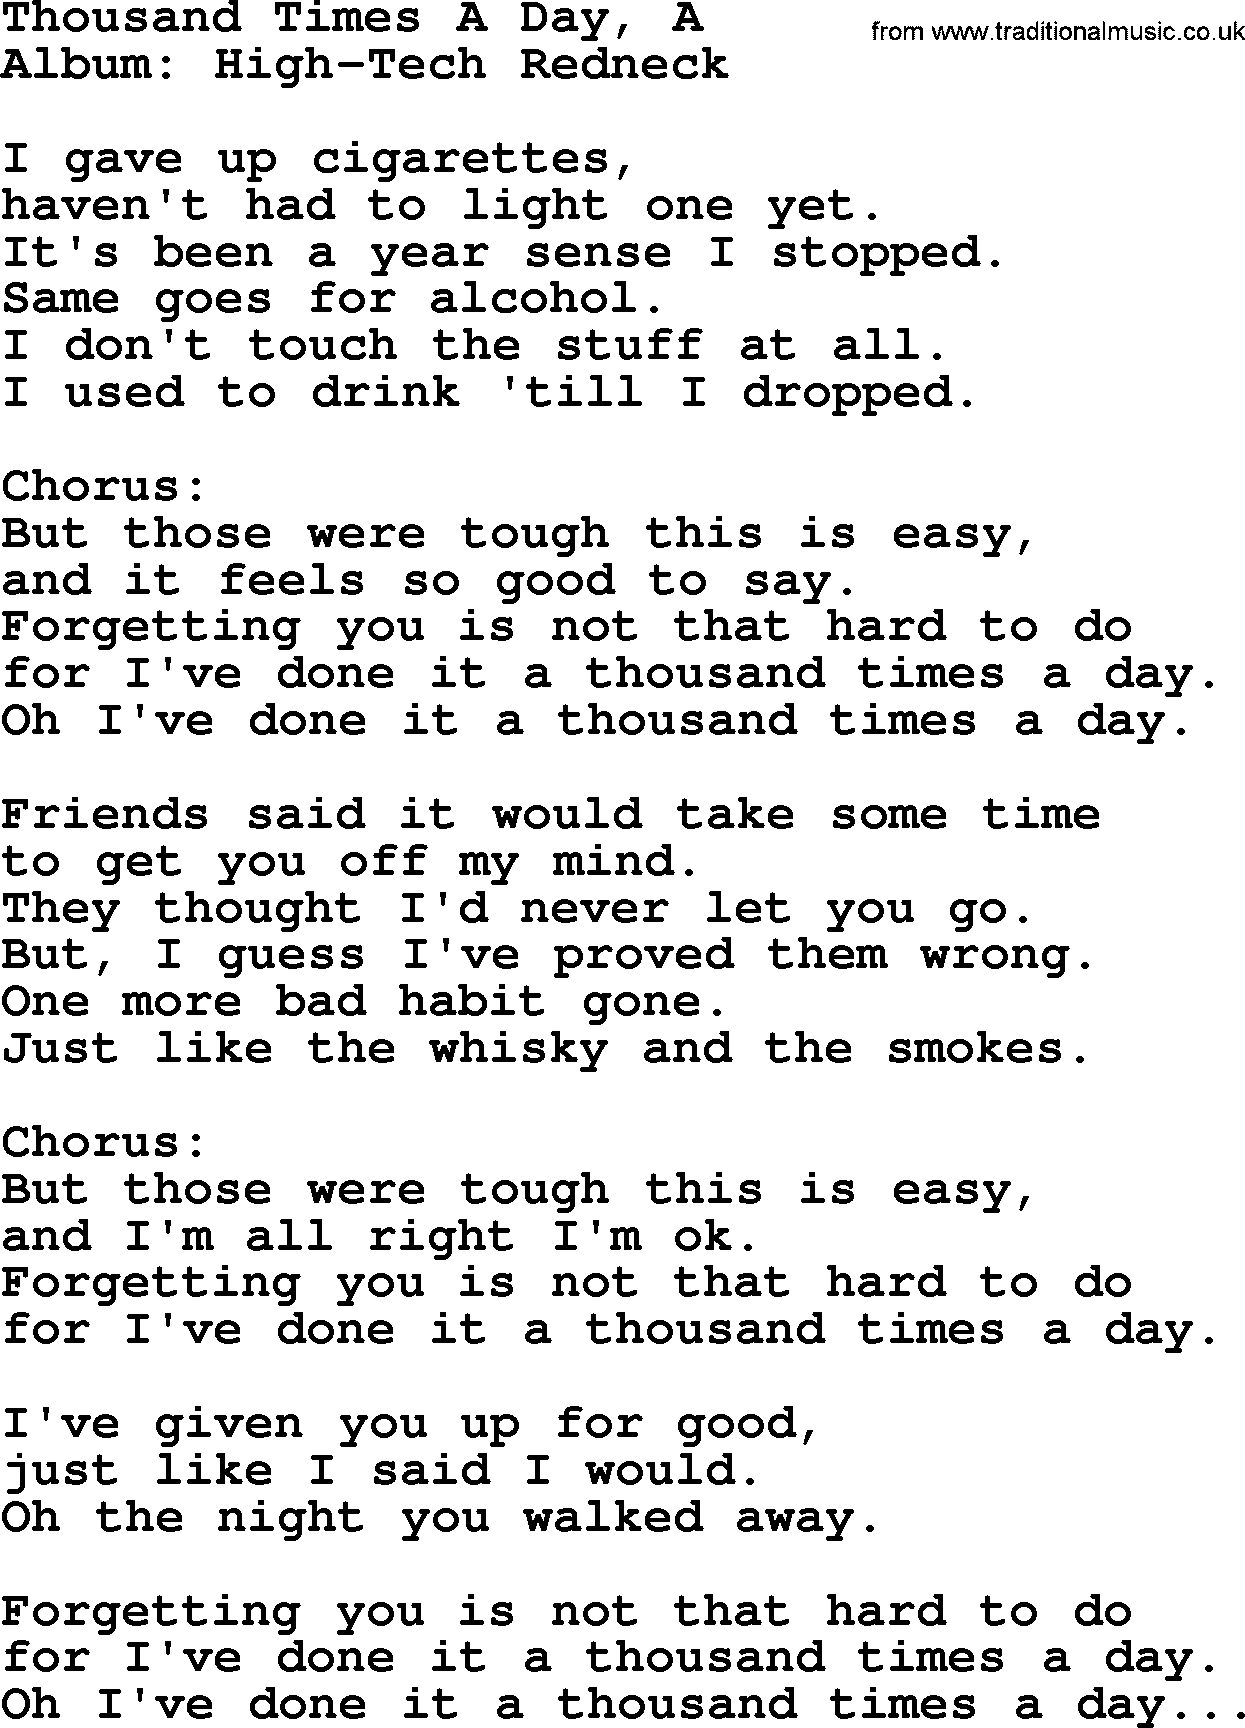 George Jones song: Thousand Times A Day, A, lyrics